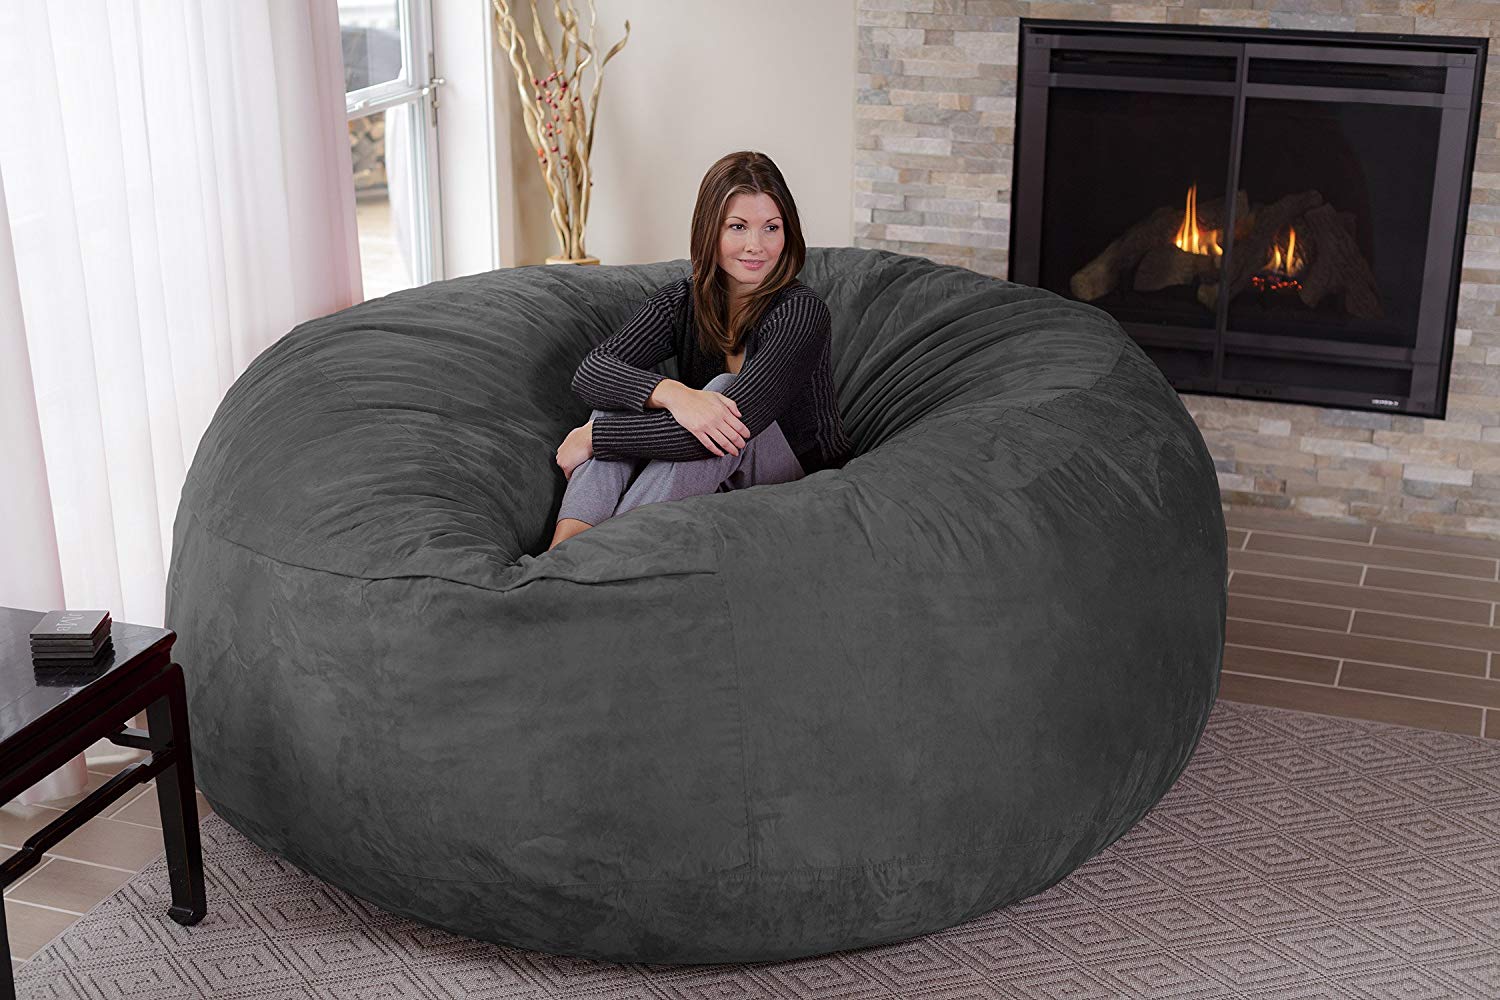 Onderscheid vandaag diepte ▷ Giant Puff Sofa - The Geek Theory